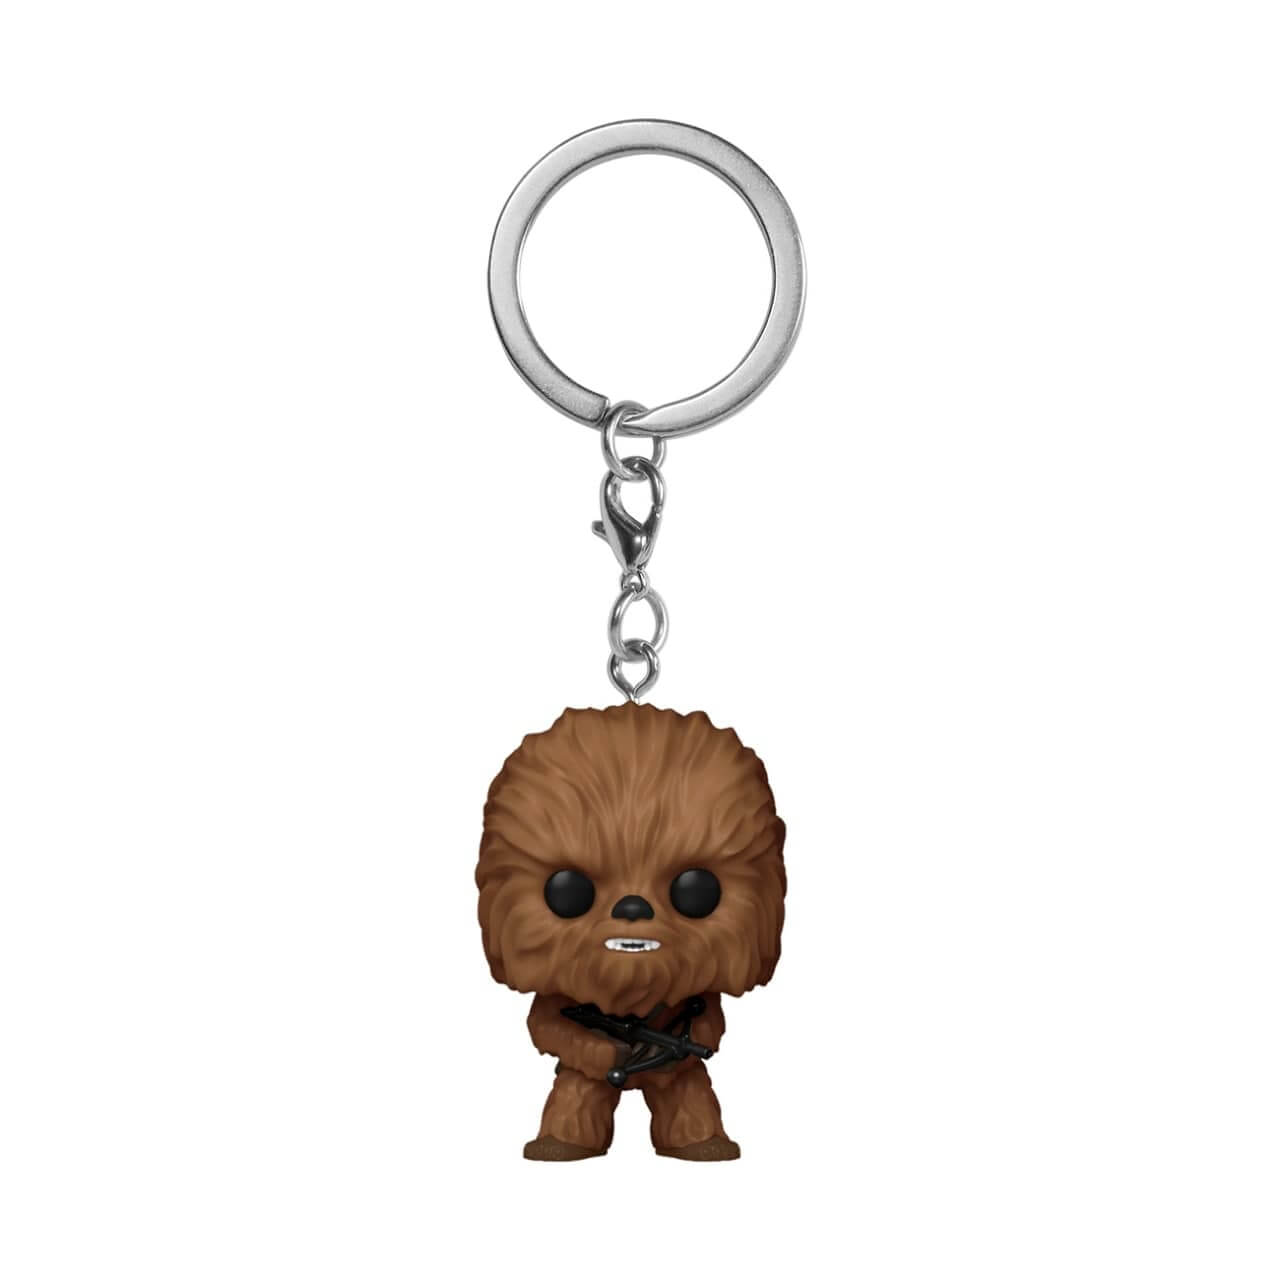 Star Wars Keyring Key Chain Chewbacca 